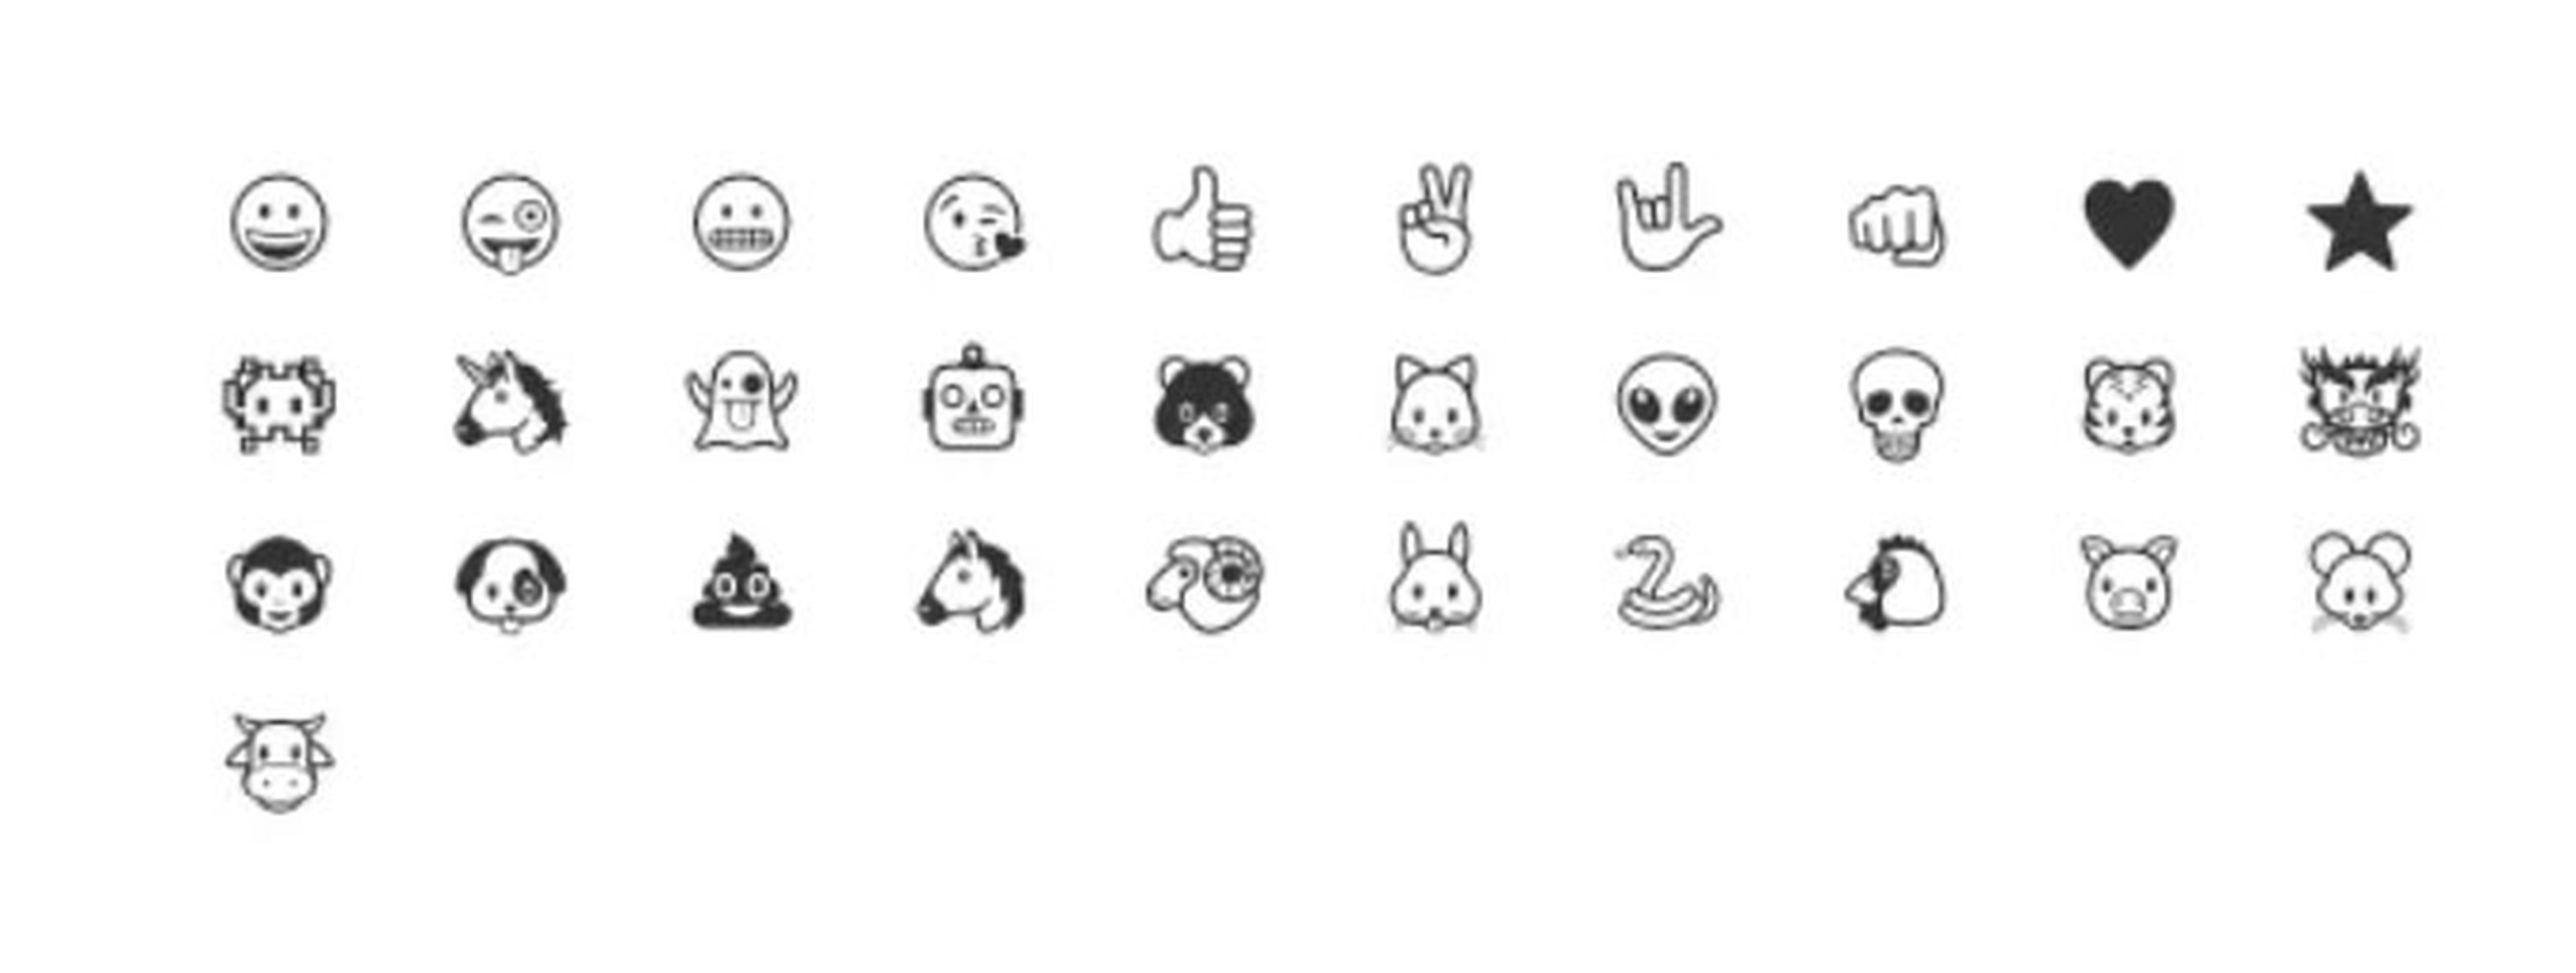 Airpods emojis